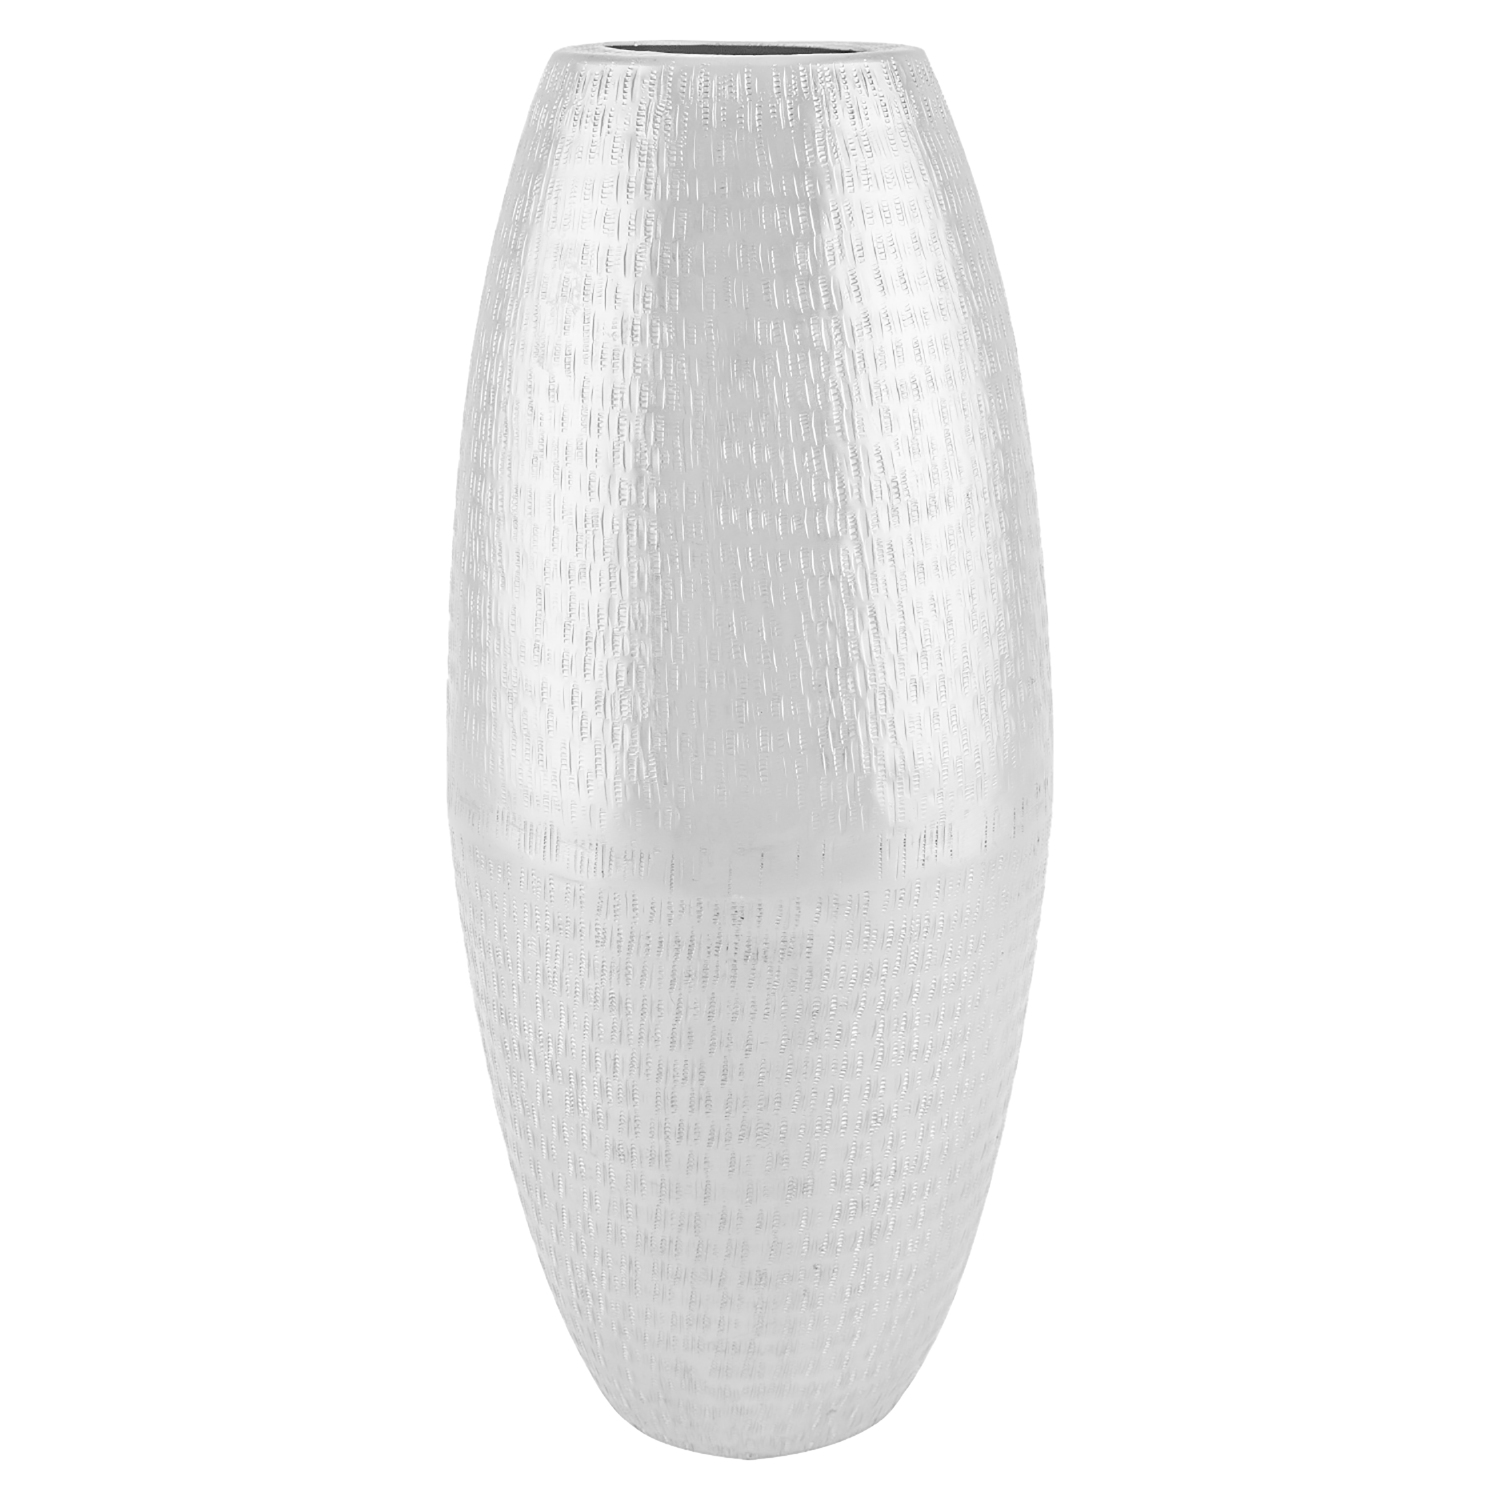 Jonas & James Large Silver Textured Vase Image